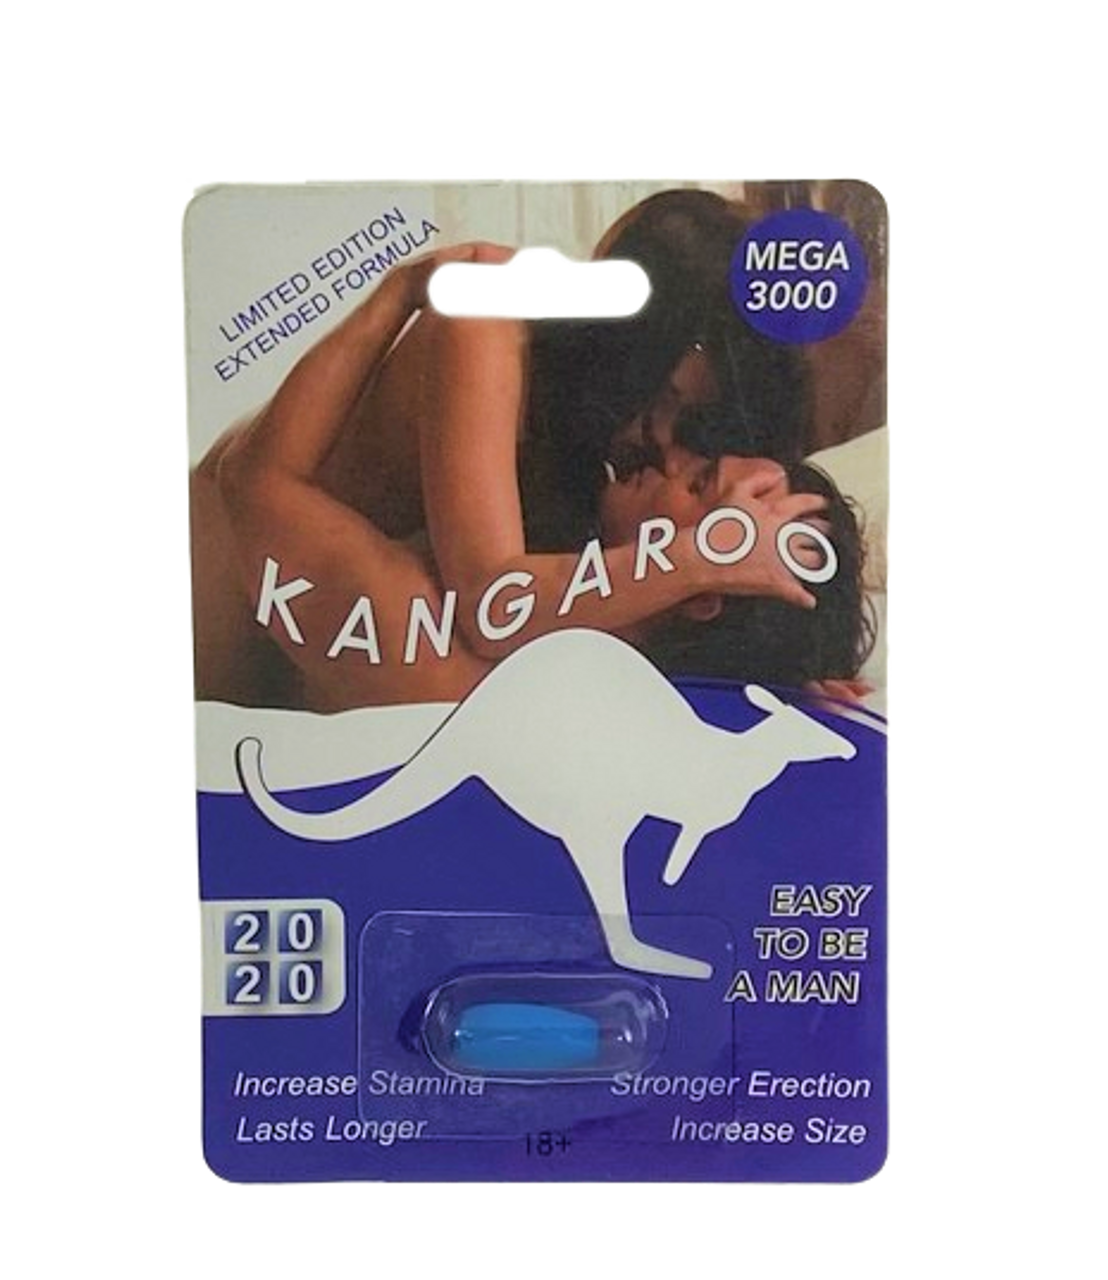 Kangaroo Blue Mega 3000 Sex Enhancer 1ct